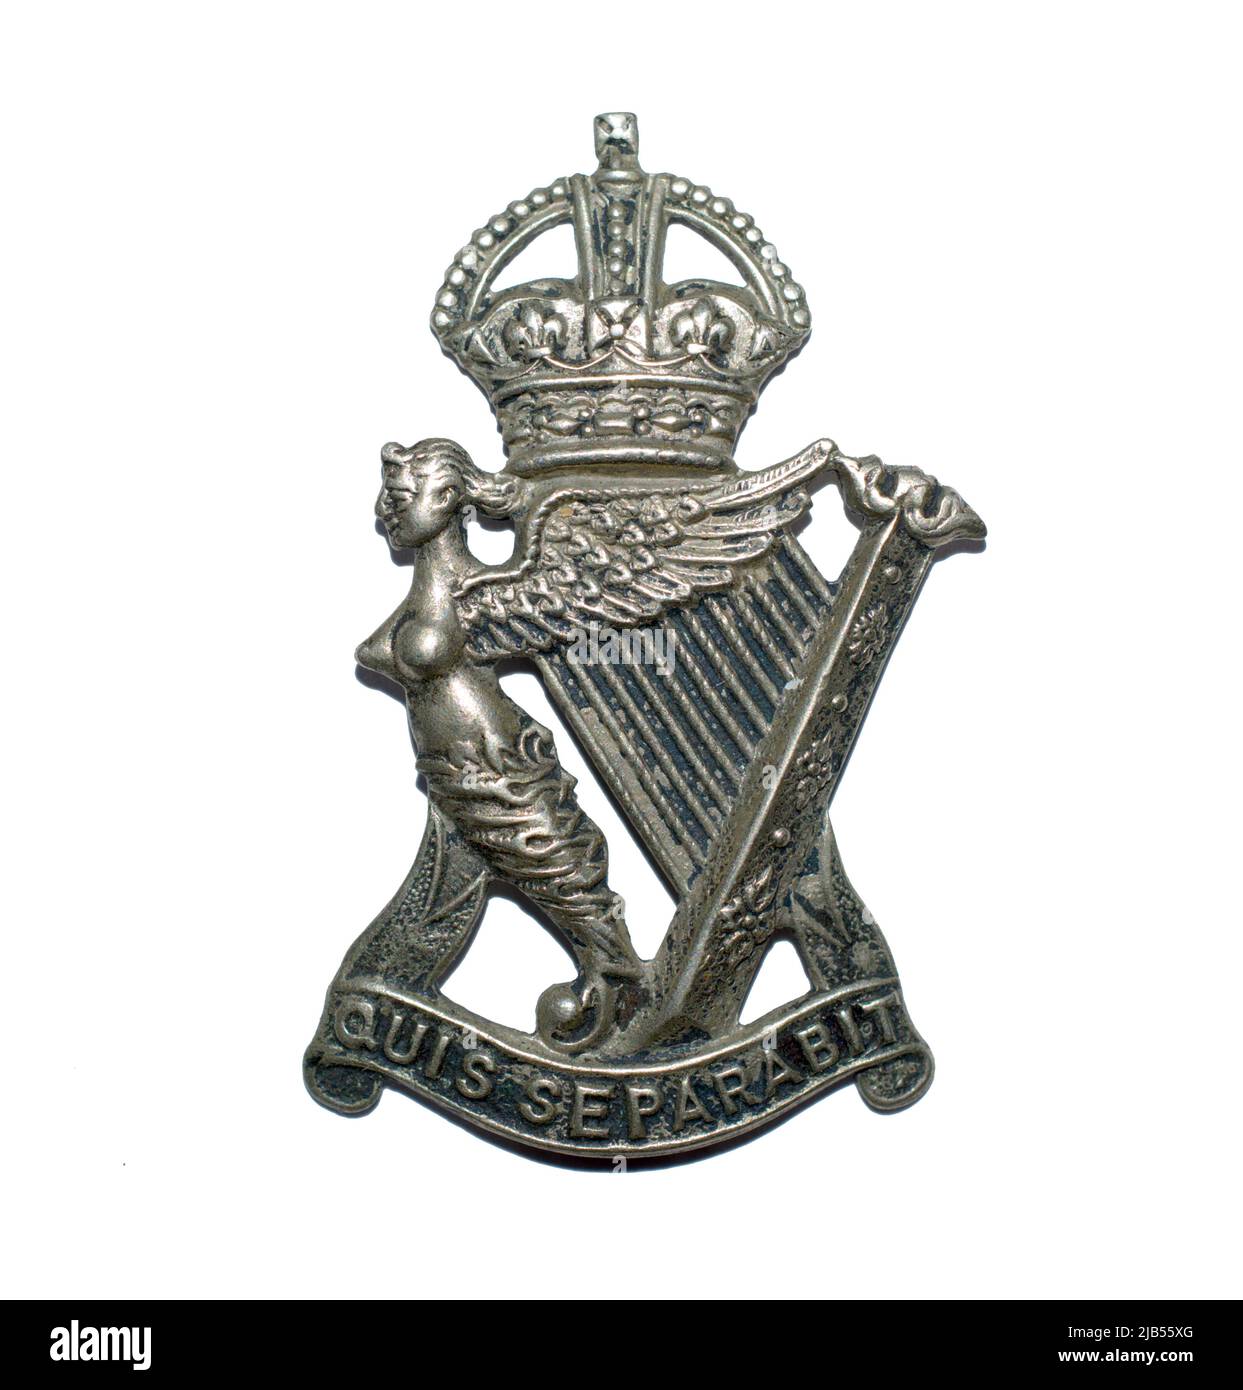 A cap badge of the Royal Irish Rifles later renamed the Royal Ulster Rifles c. 1913-1952. Stock Photo